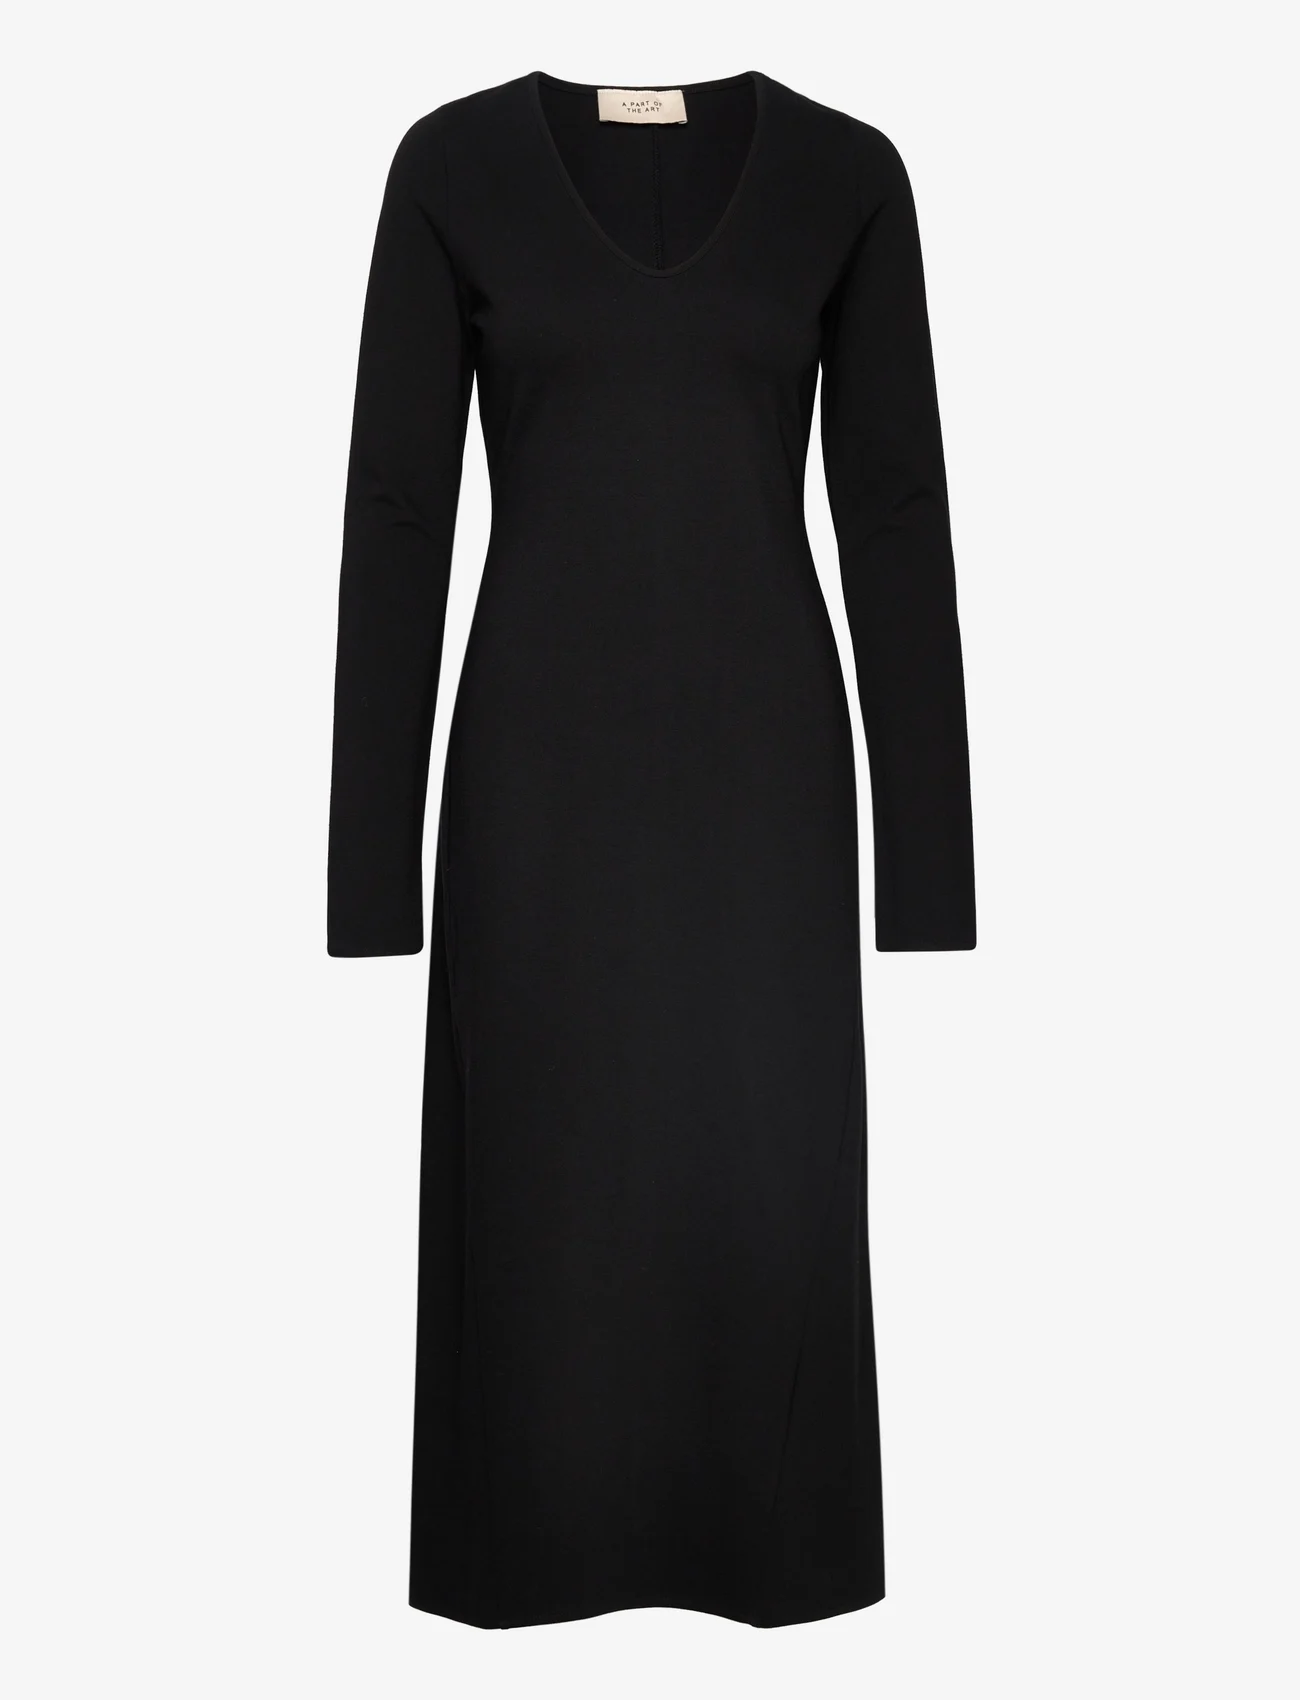 A Part Of The Art - FREE LONG SLEEVE DRESS - sukienki koszulowe - black - 0